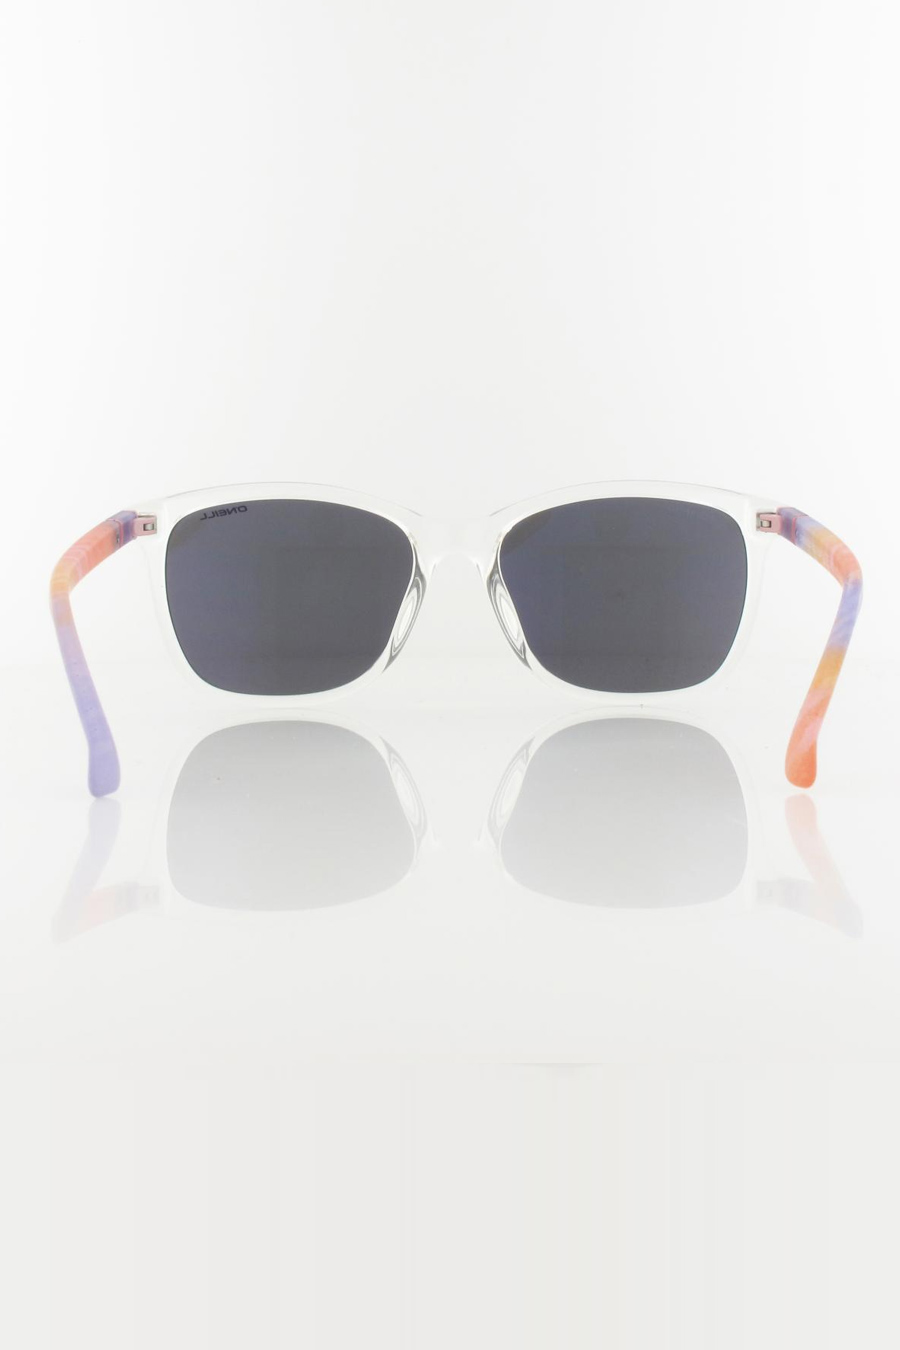 Sunglasses ONEILL ONS-9015-20-113P